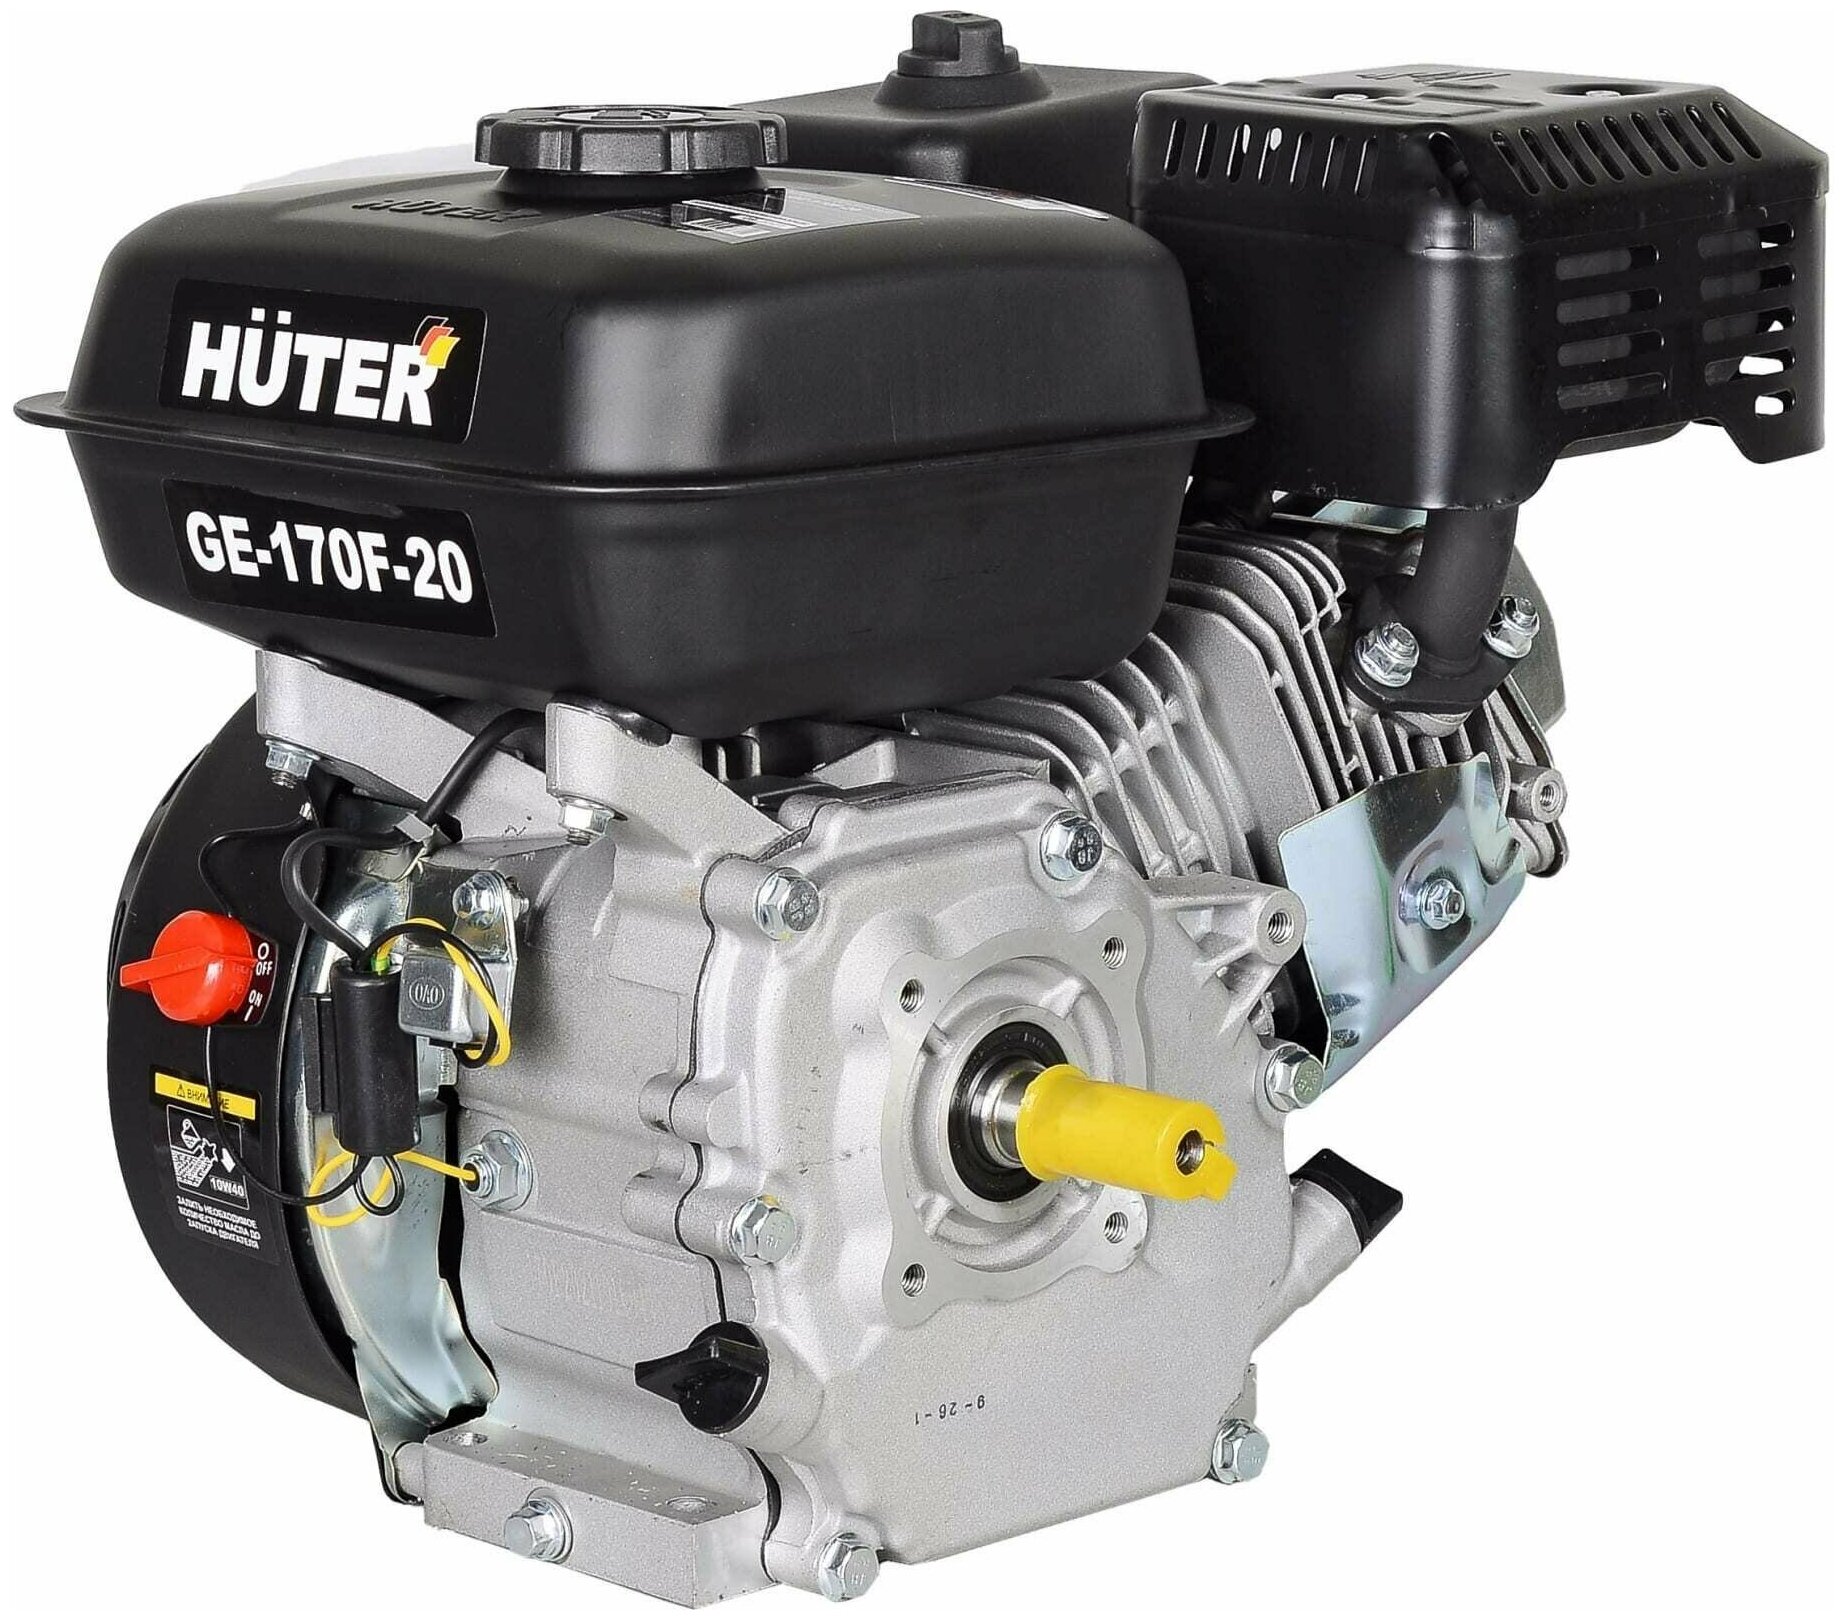 Huter Двигатель бензиновый GE-170F-20 70/15/2